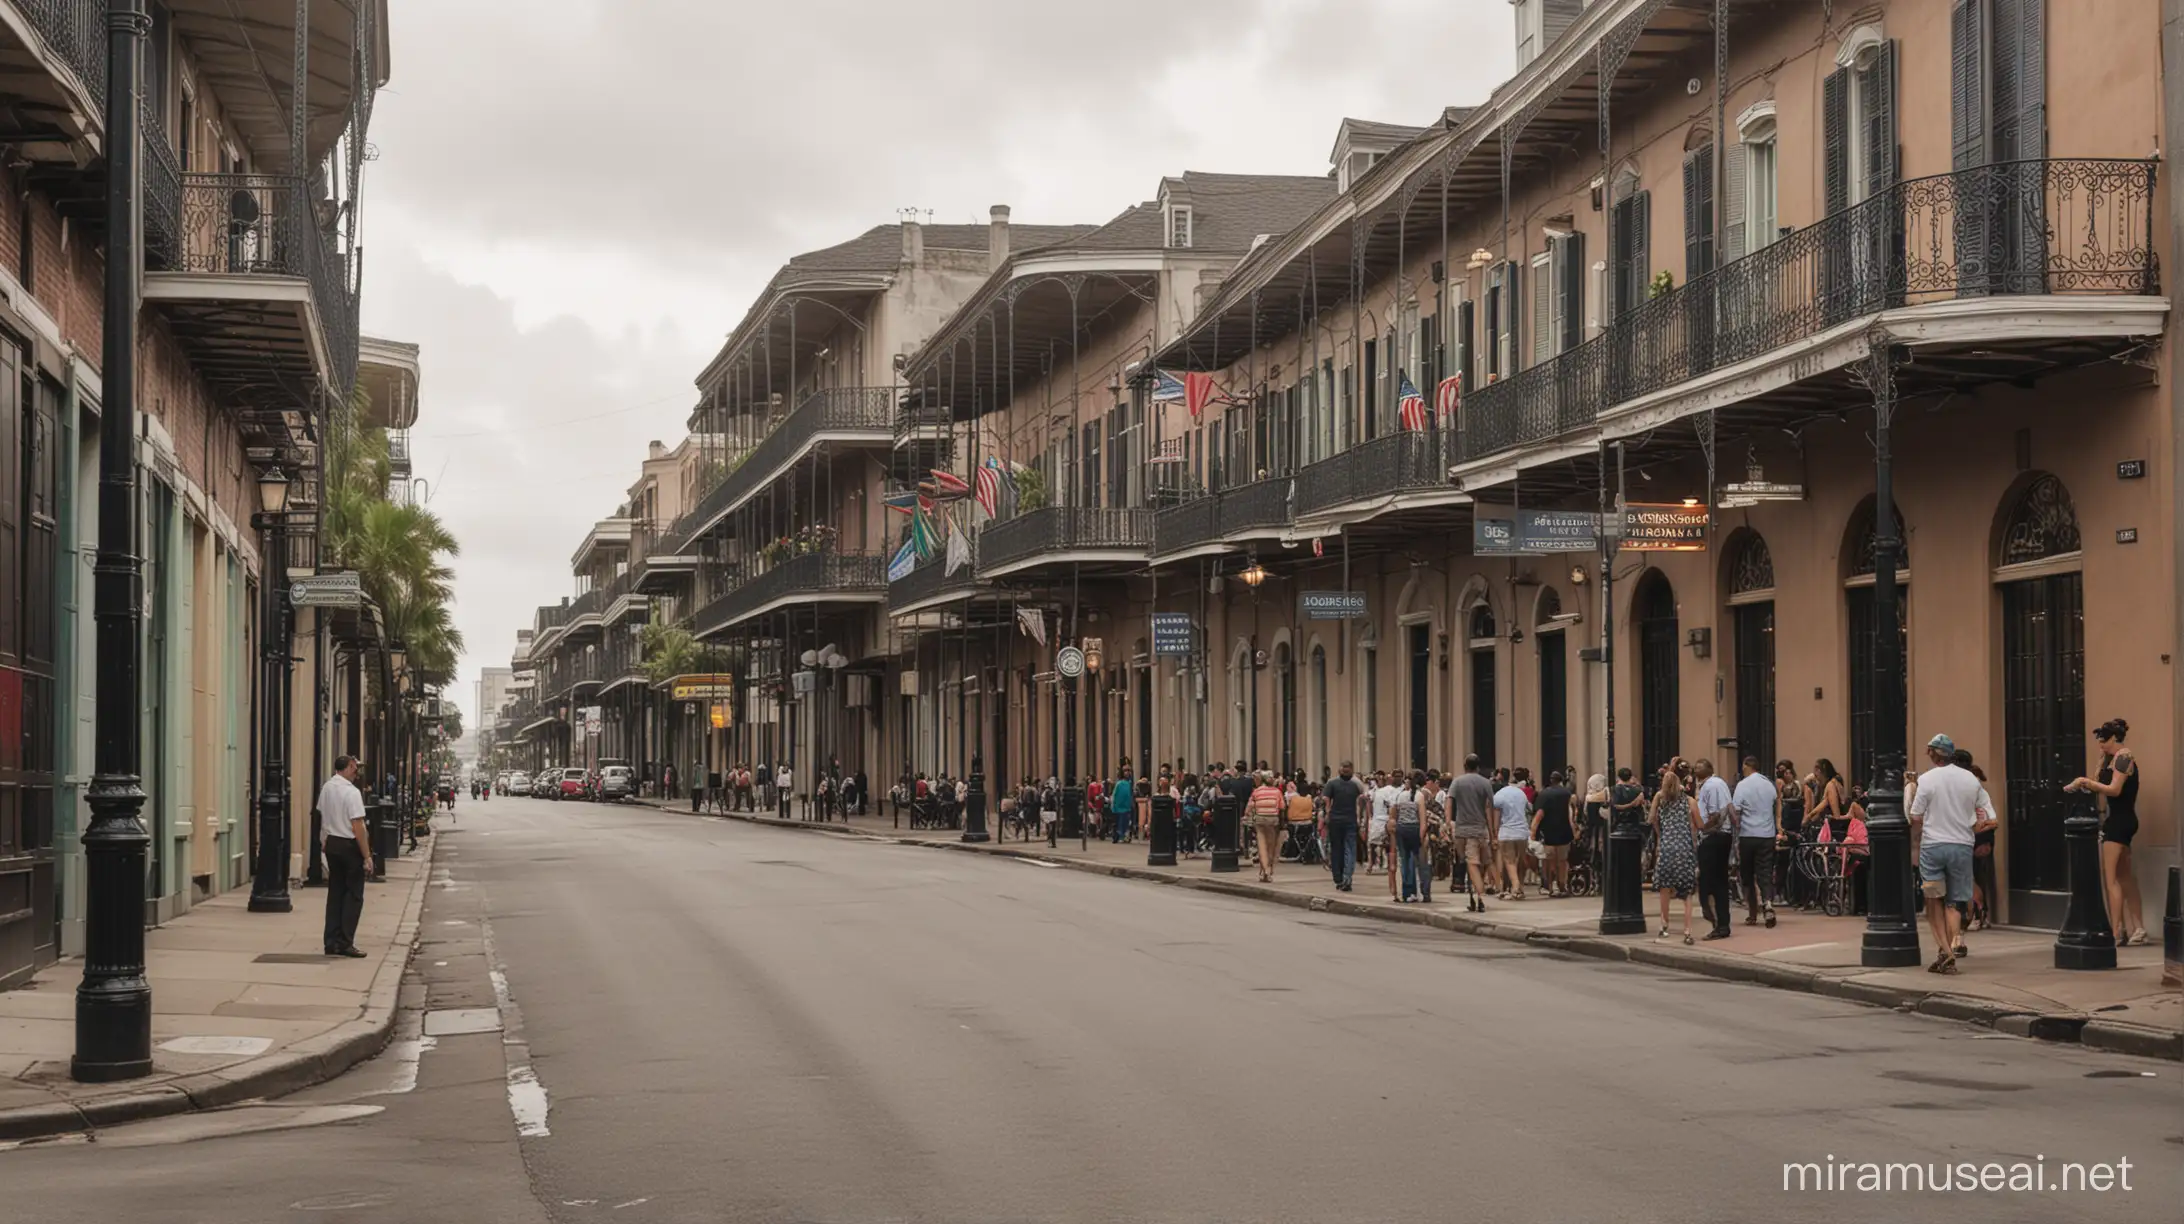 Vibrant Royal Street Scene in New Orleans